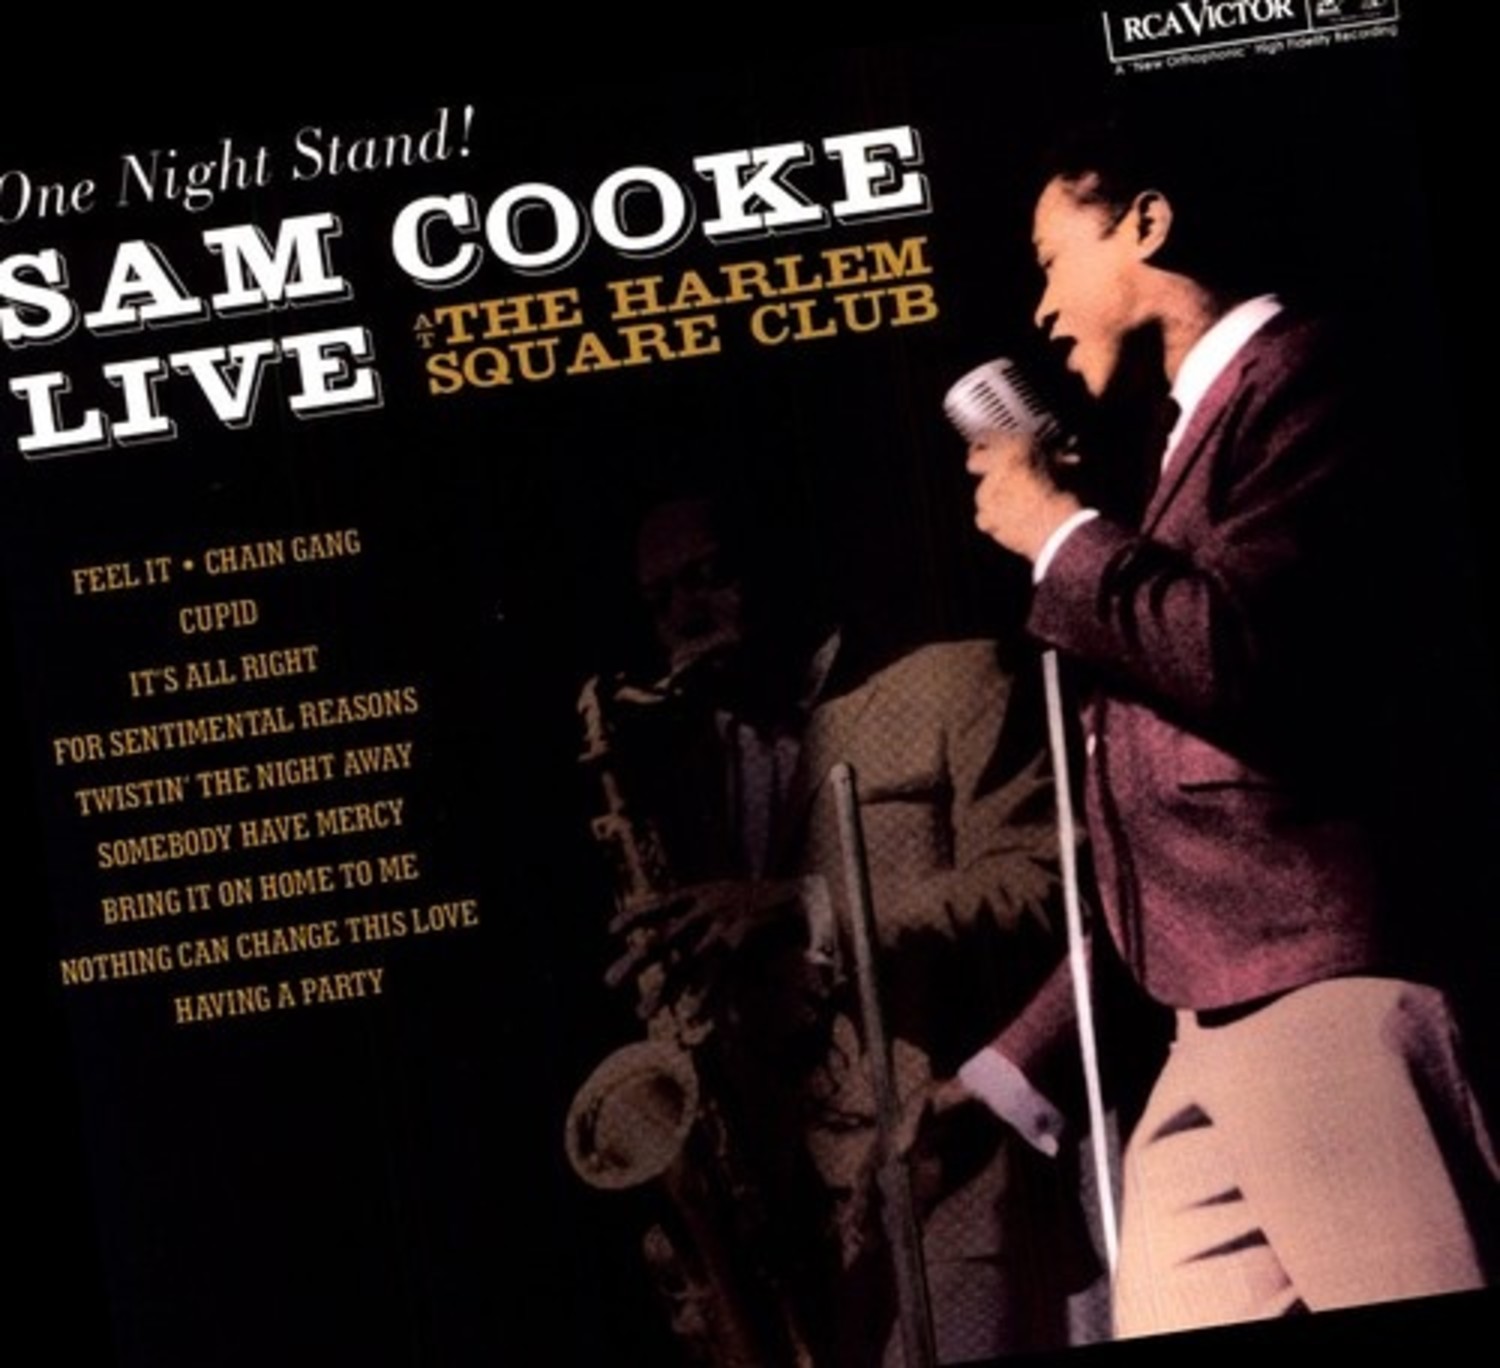 Cooke, Sam - Live at the Harlem Square Club LP (180g) - Wax Trax 